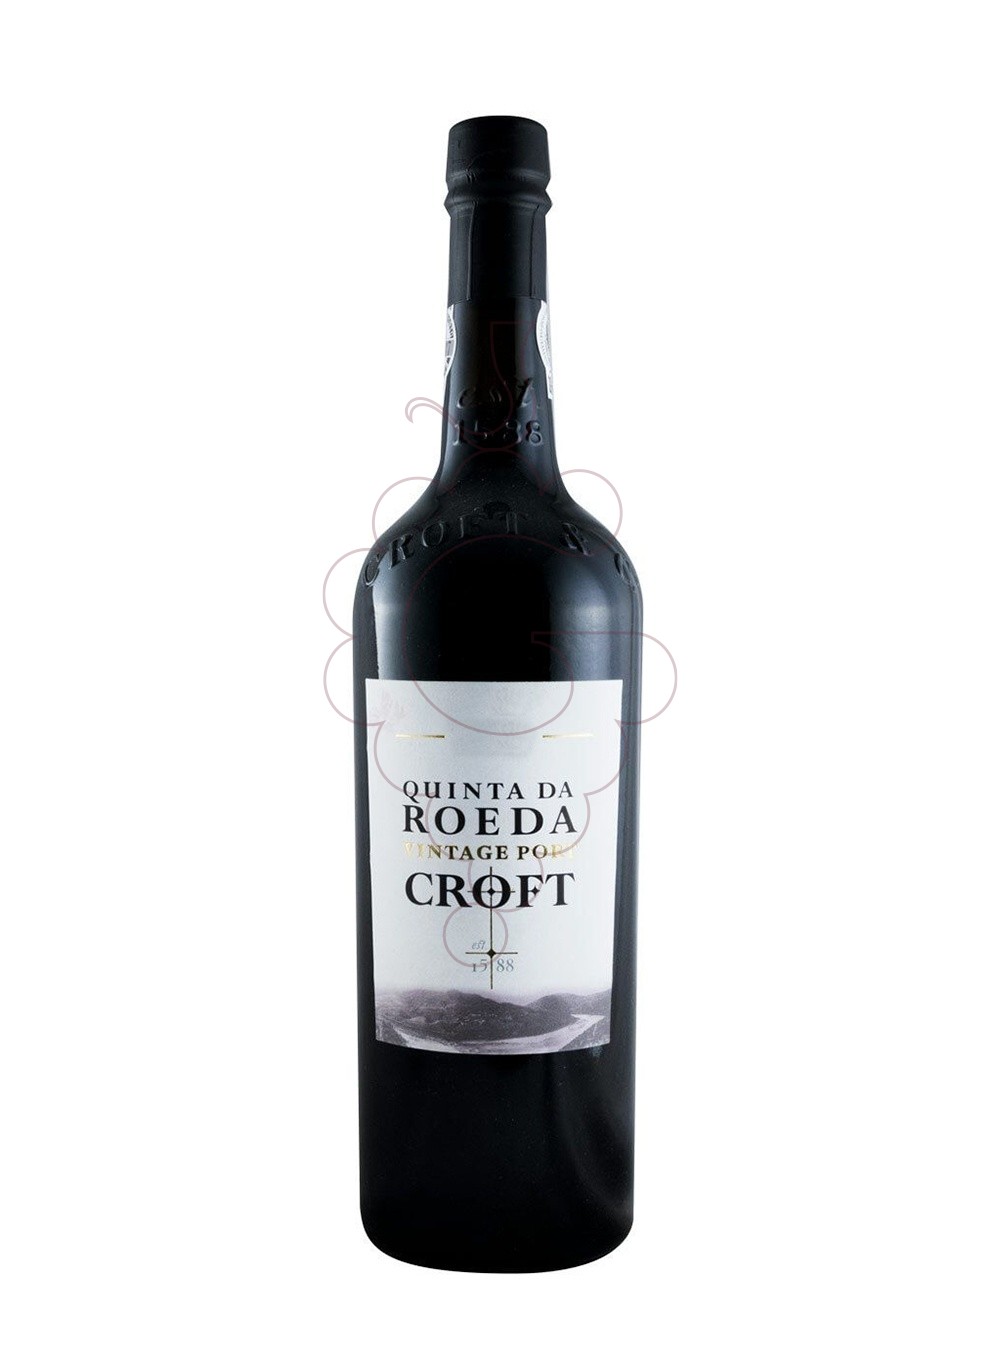 Photo Croft quinta da roeda 2012 fortified wine